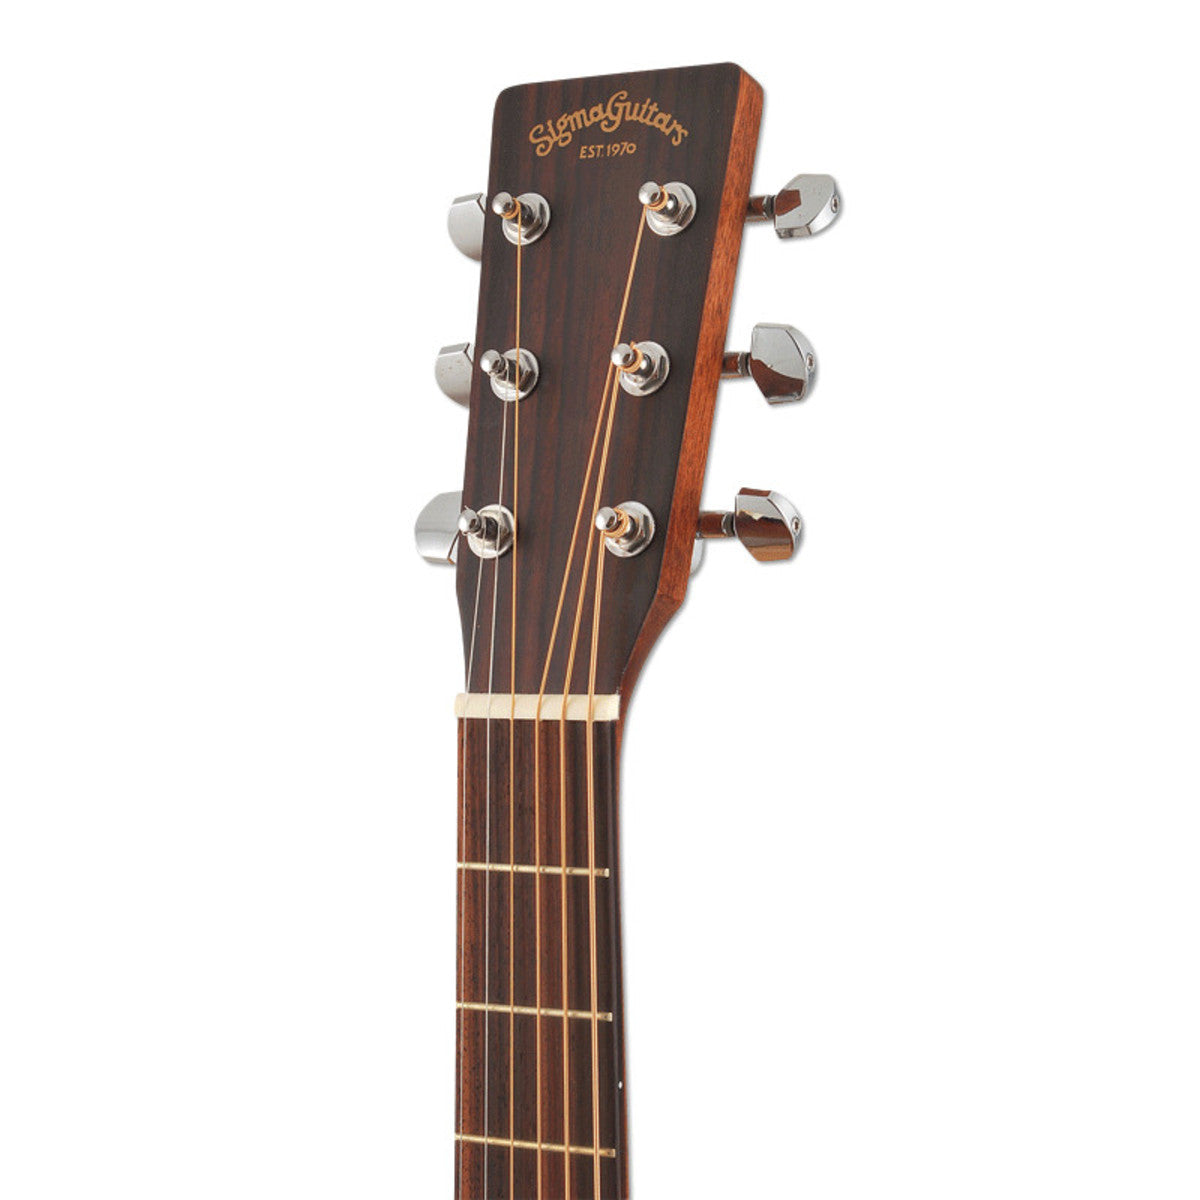 DM-1ST Left Handed Acoustic Guitar